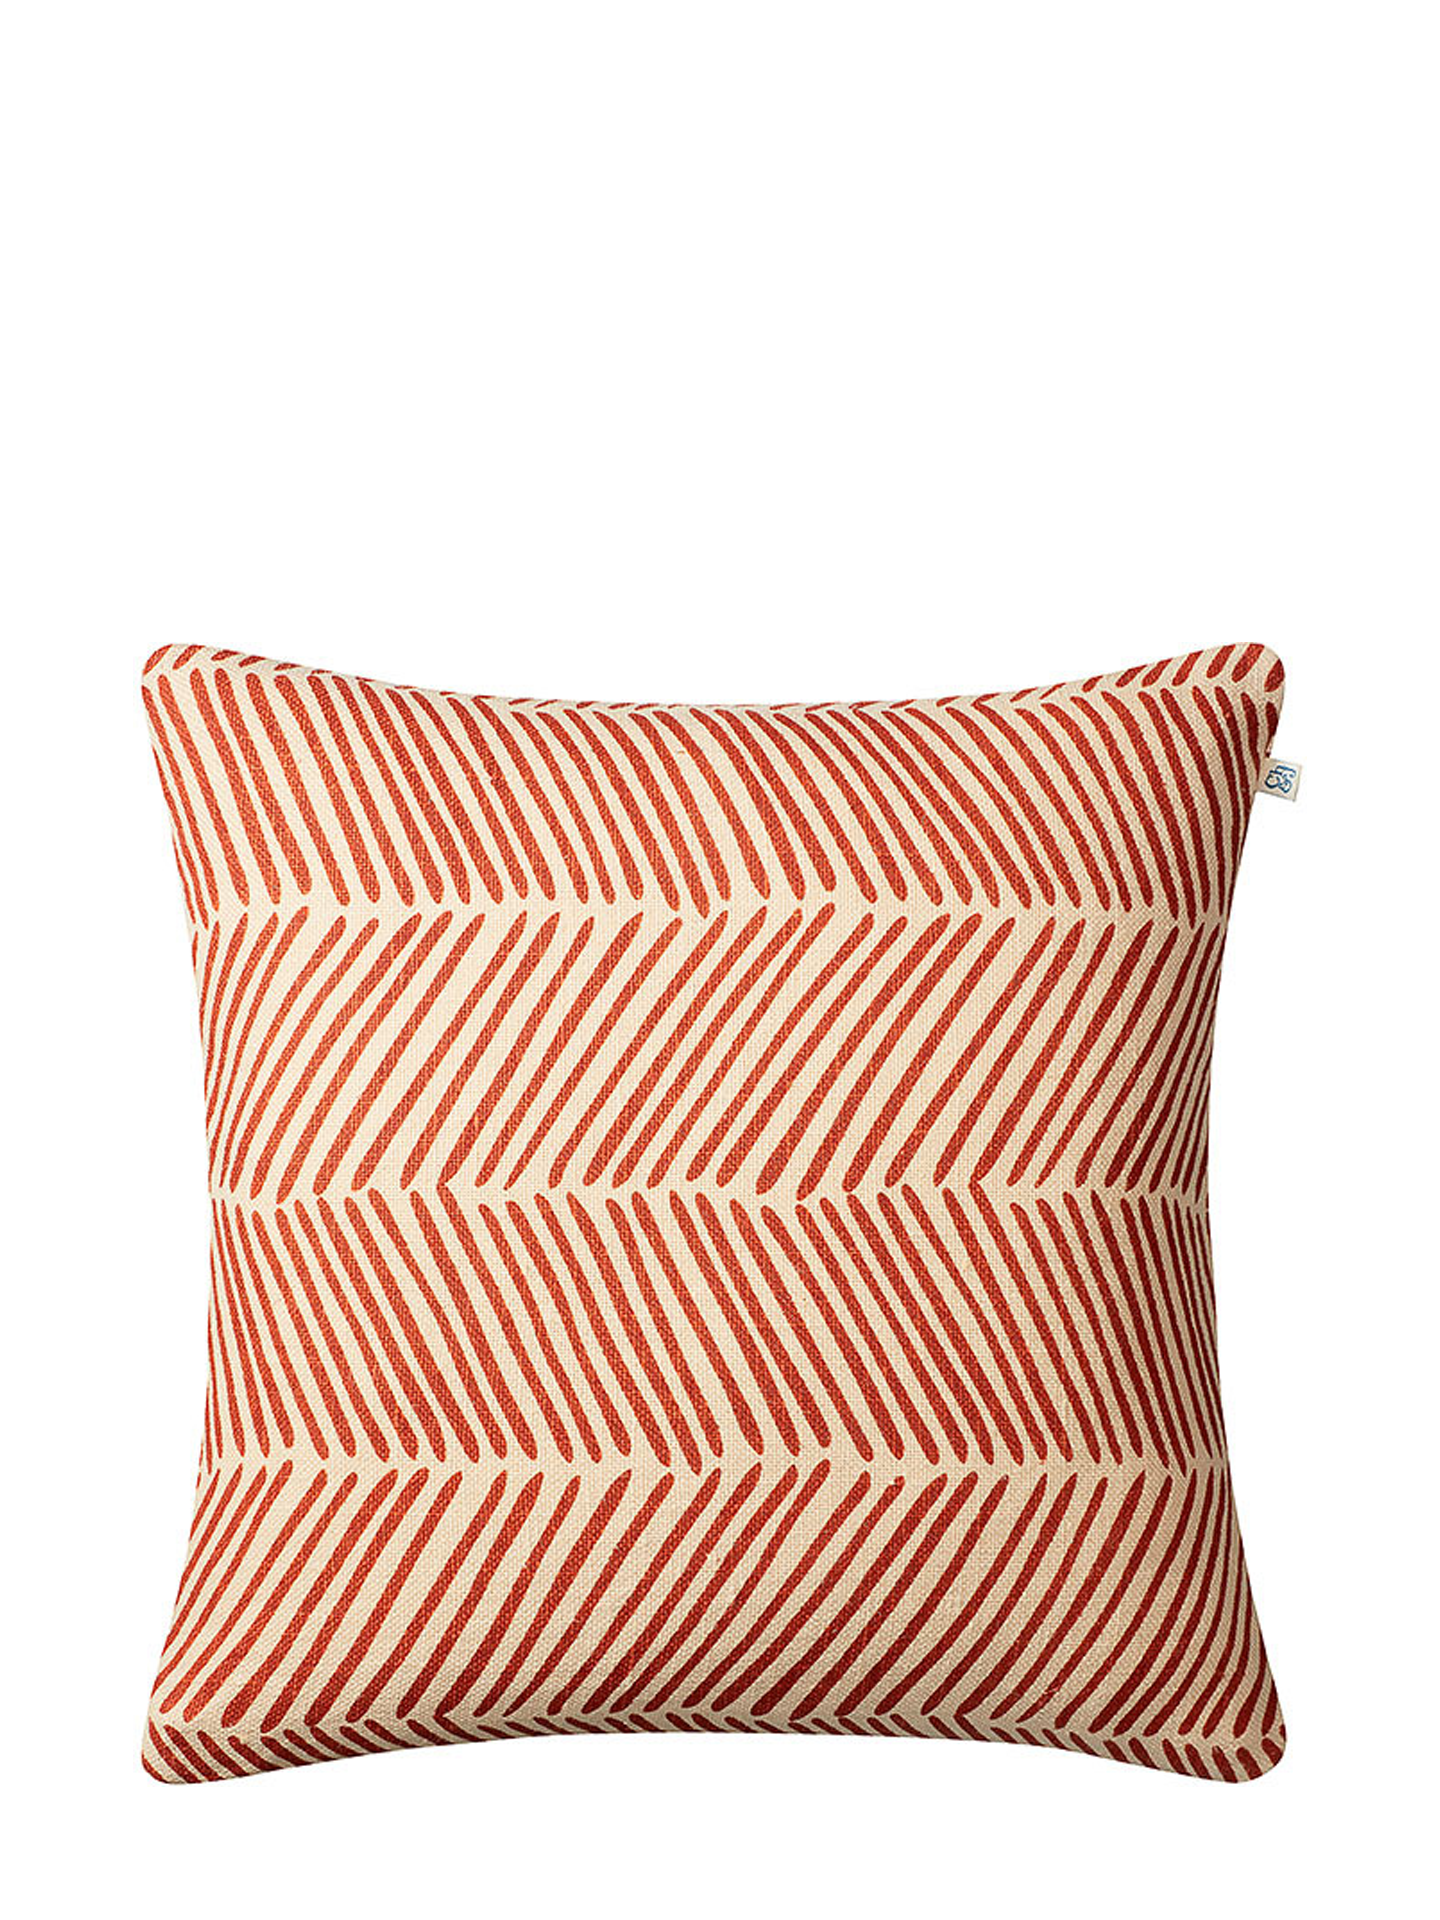 Rama Cushion Cover, Light Beige/Apricot Orange